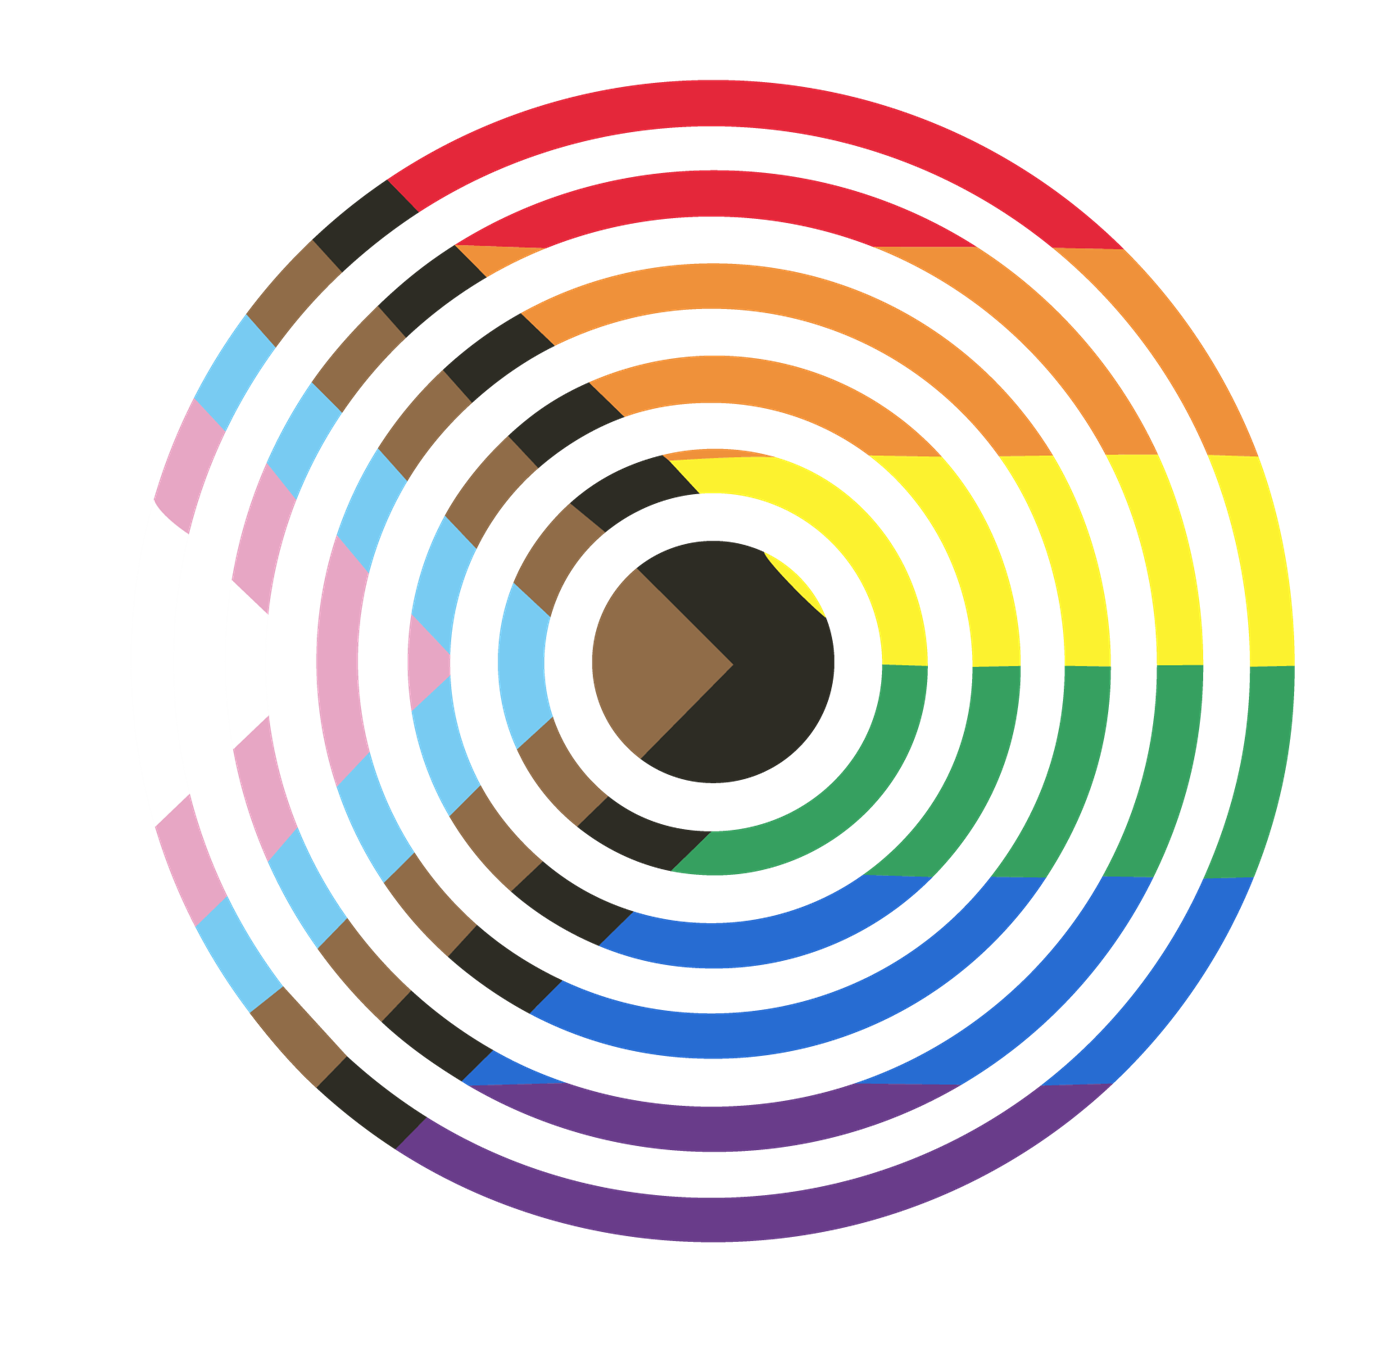 IA Labs logo containing the Pride Flag colours